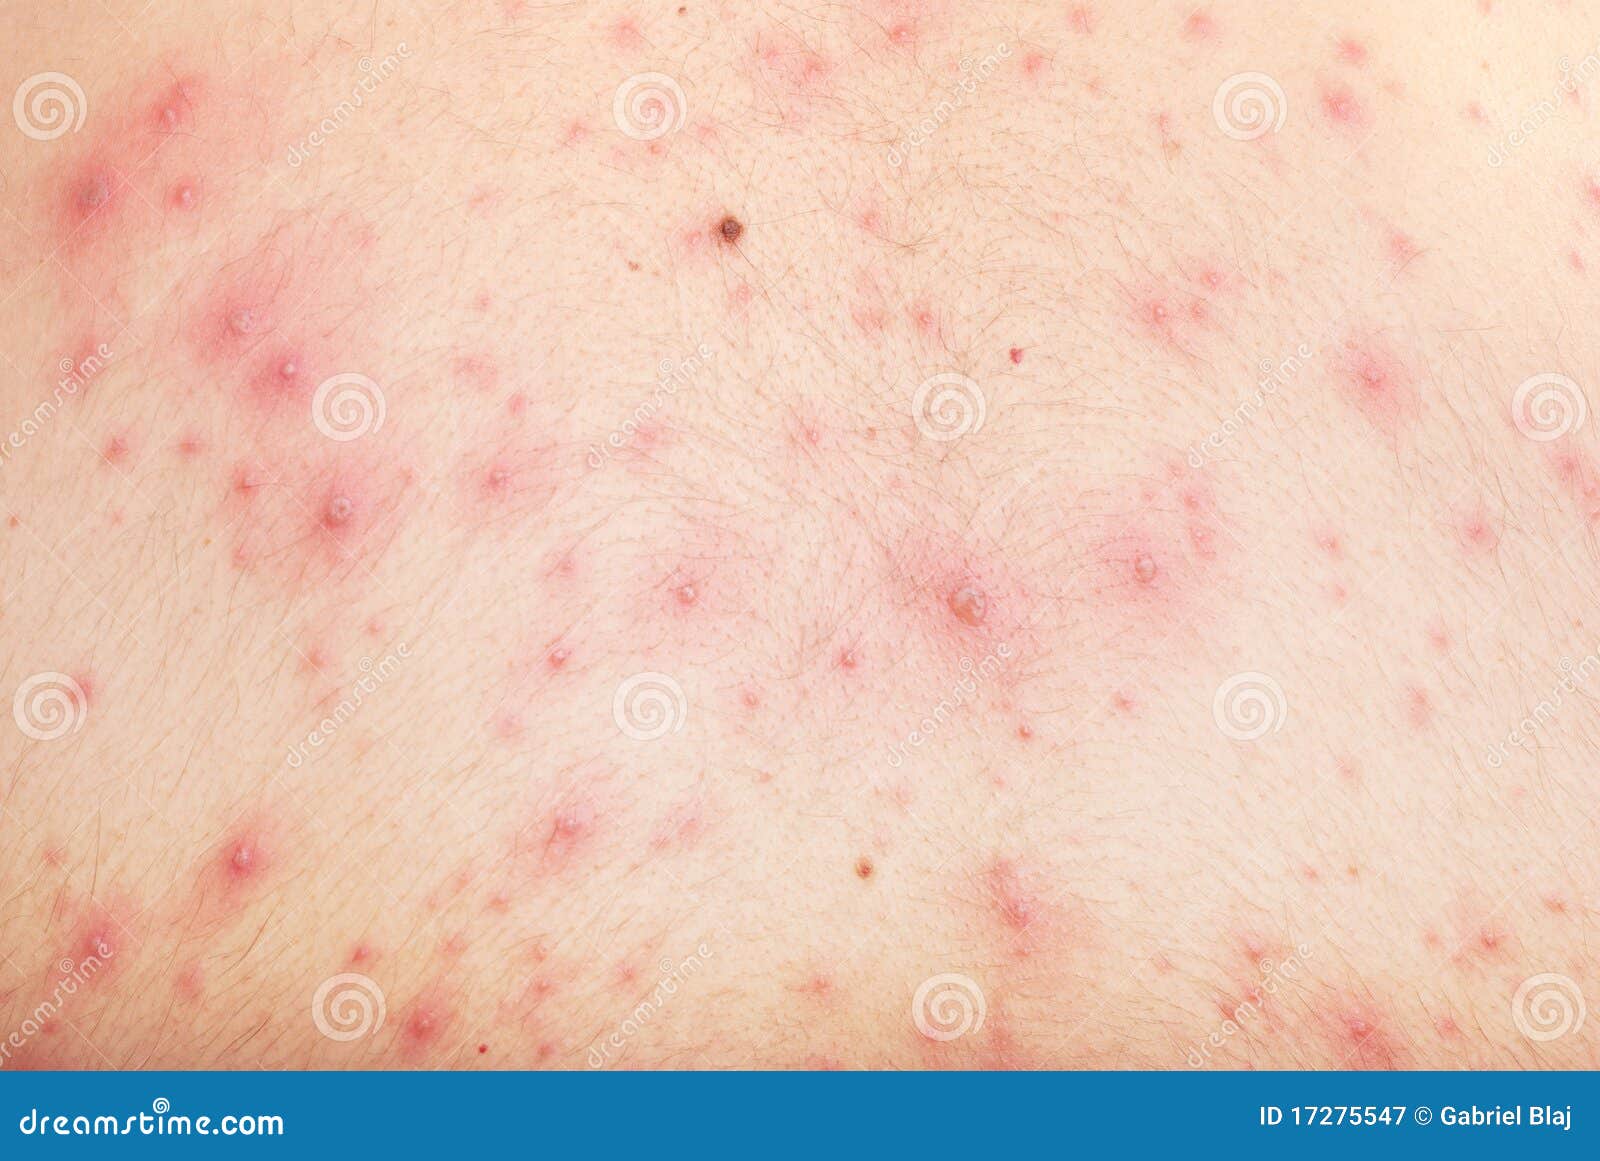 Chickenpox (Varicella) Photos - Vaccine Information You ...